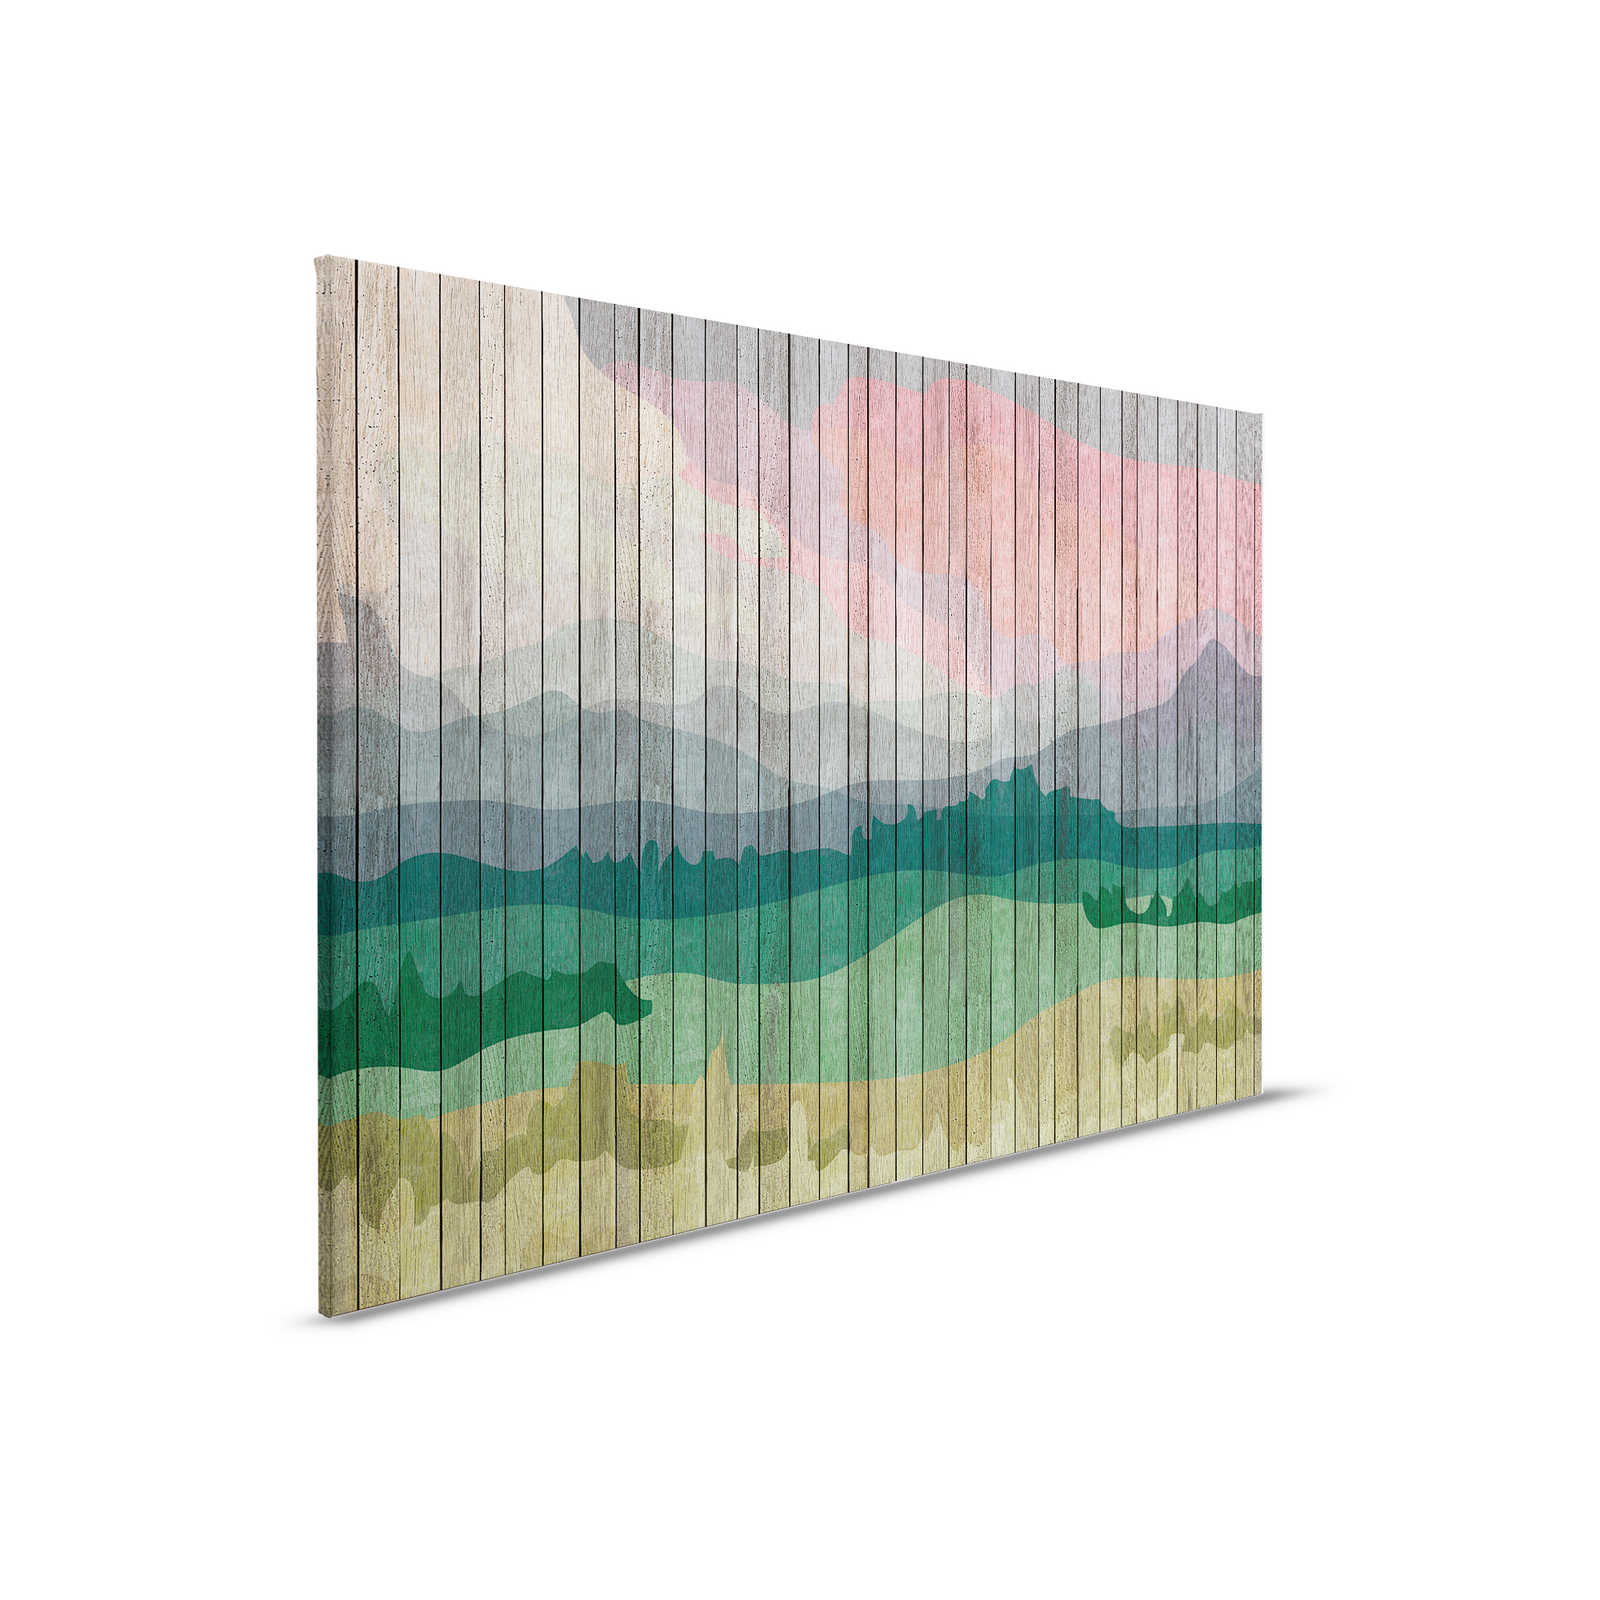 Mountains 2 - modern canvas picture mountain landscape & board optics - 0,90 m x 0,60 m
